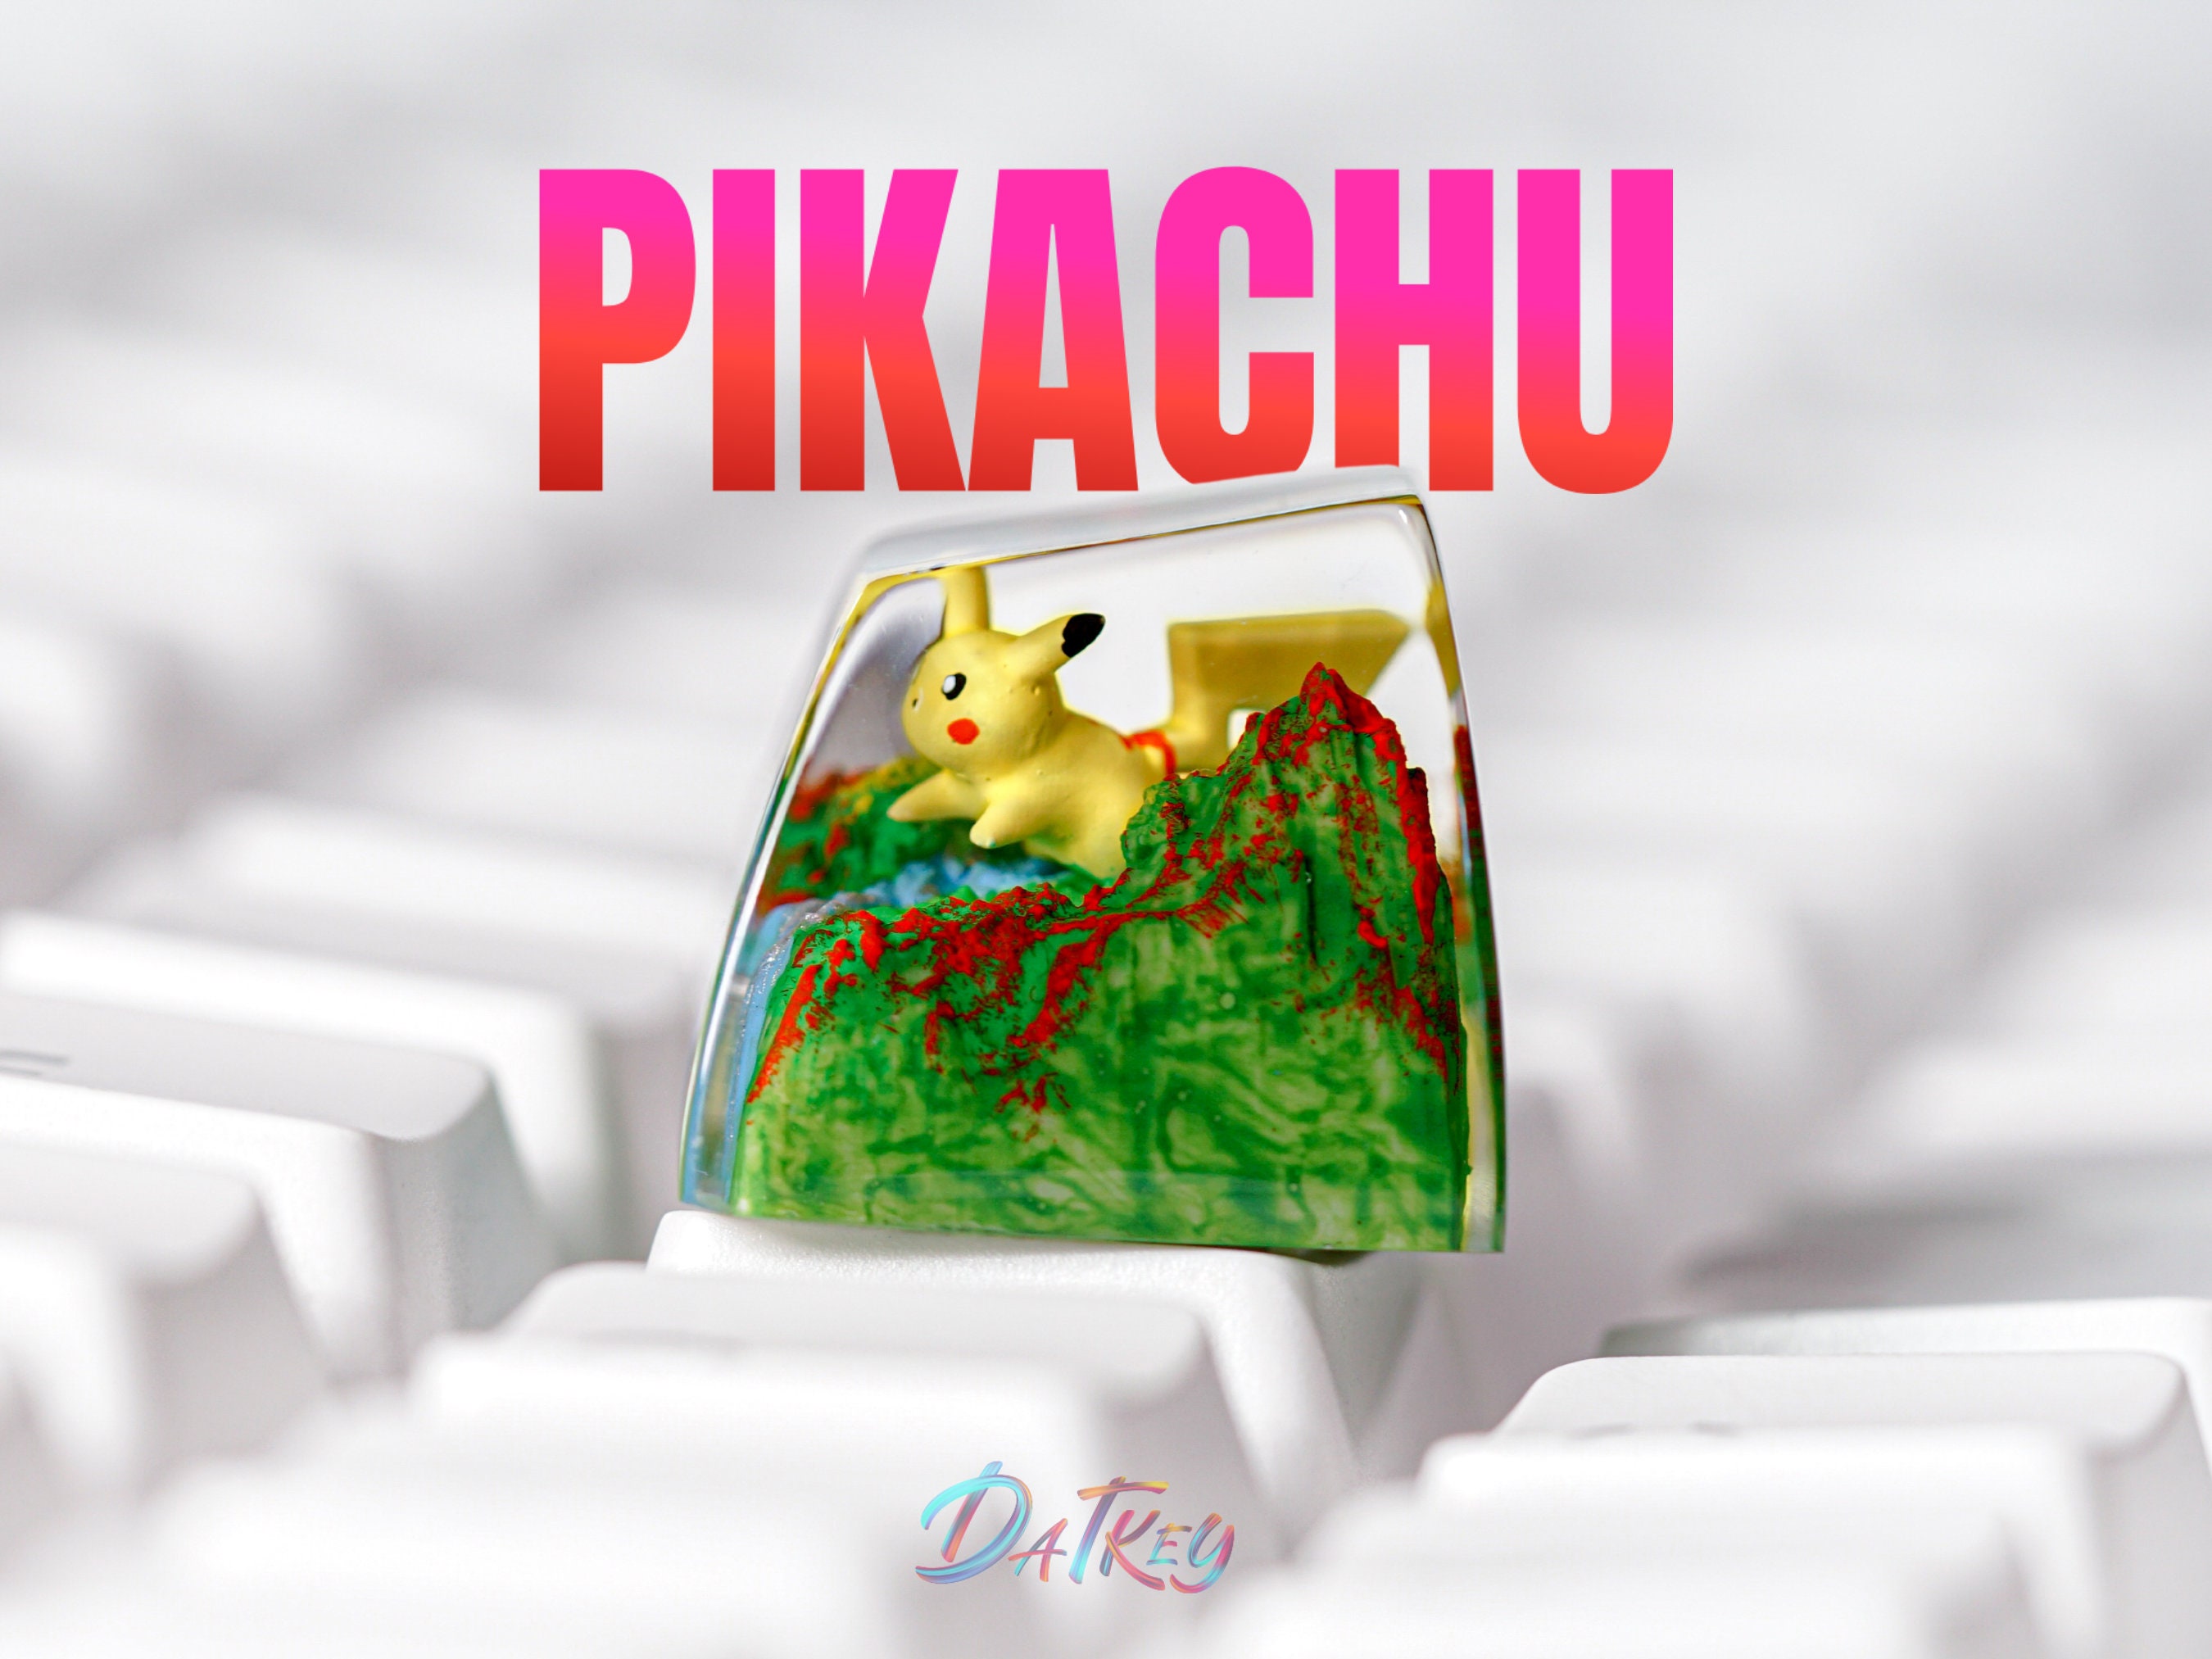 Pikachu Keycap, Pokemon Keycap, Artisan Keycap, Esc Keycap, Keycap for MX Cherry Switches Keyboard, Handmade Gift